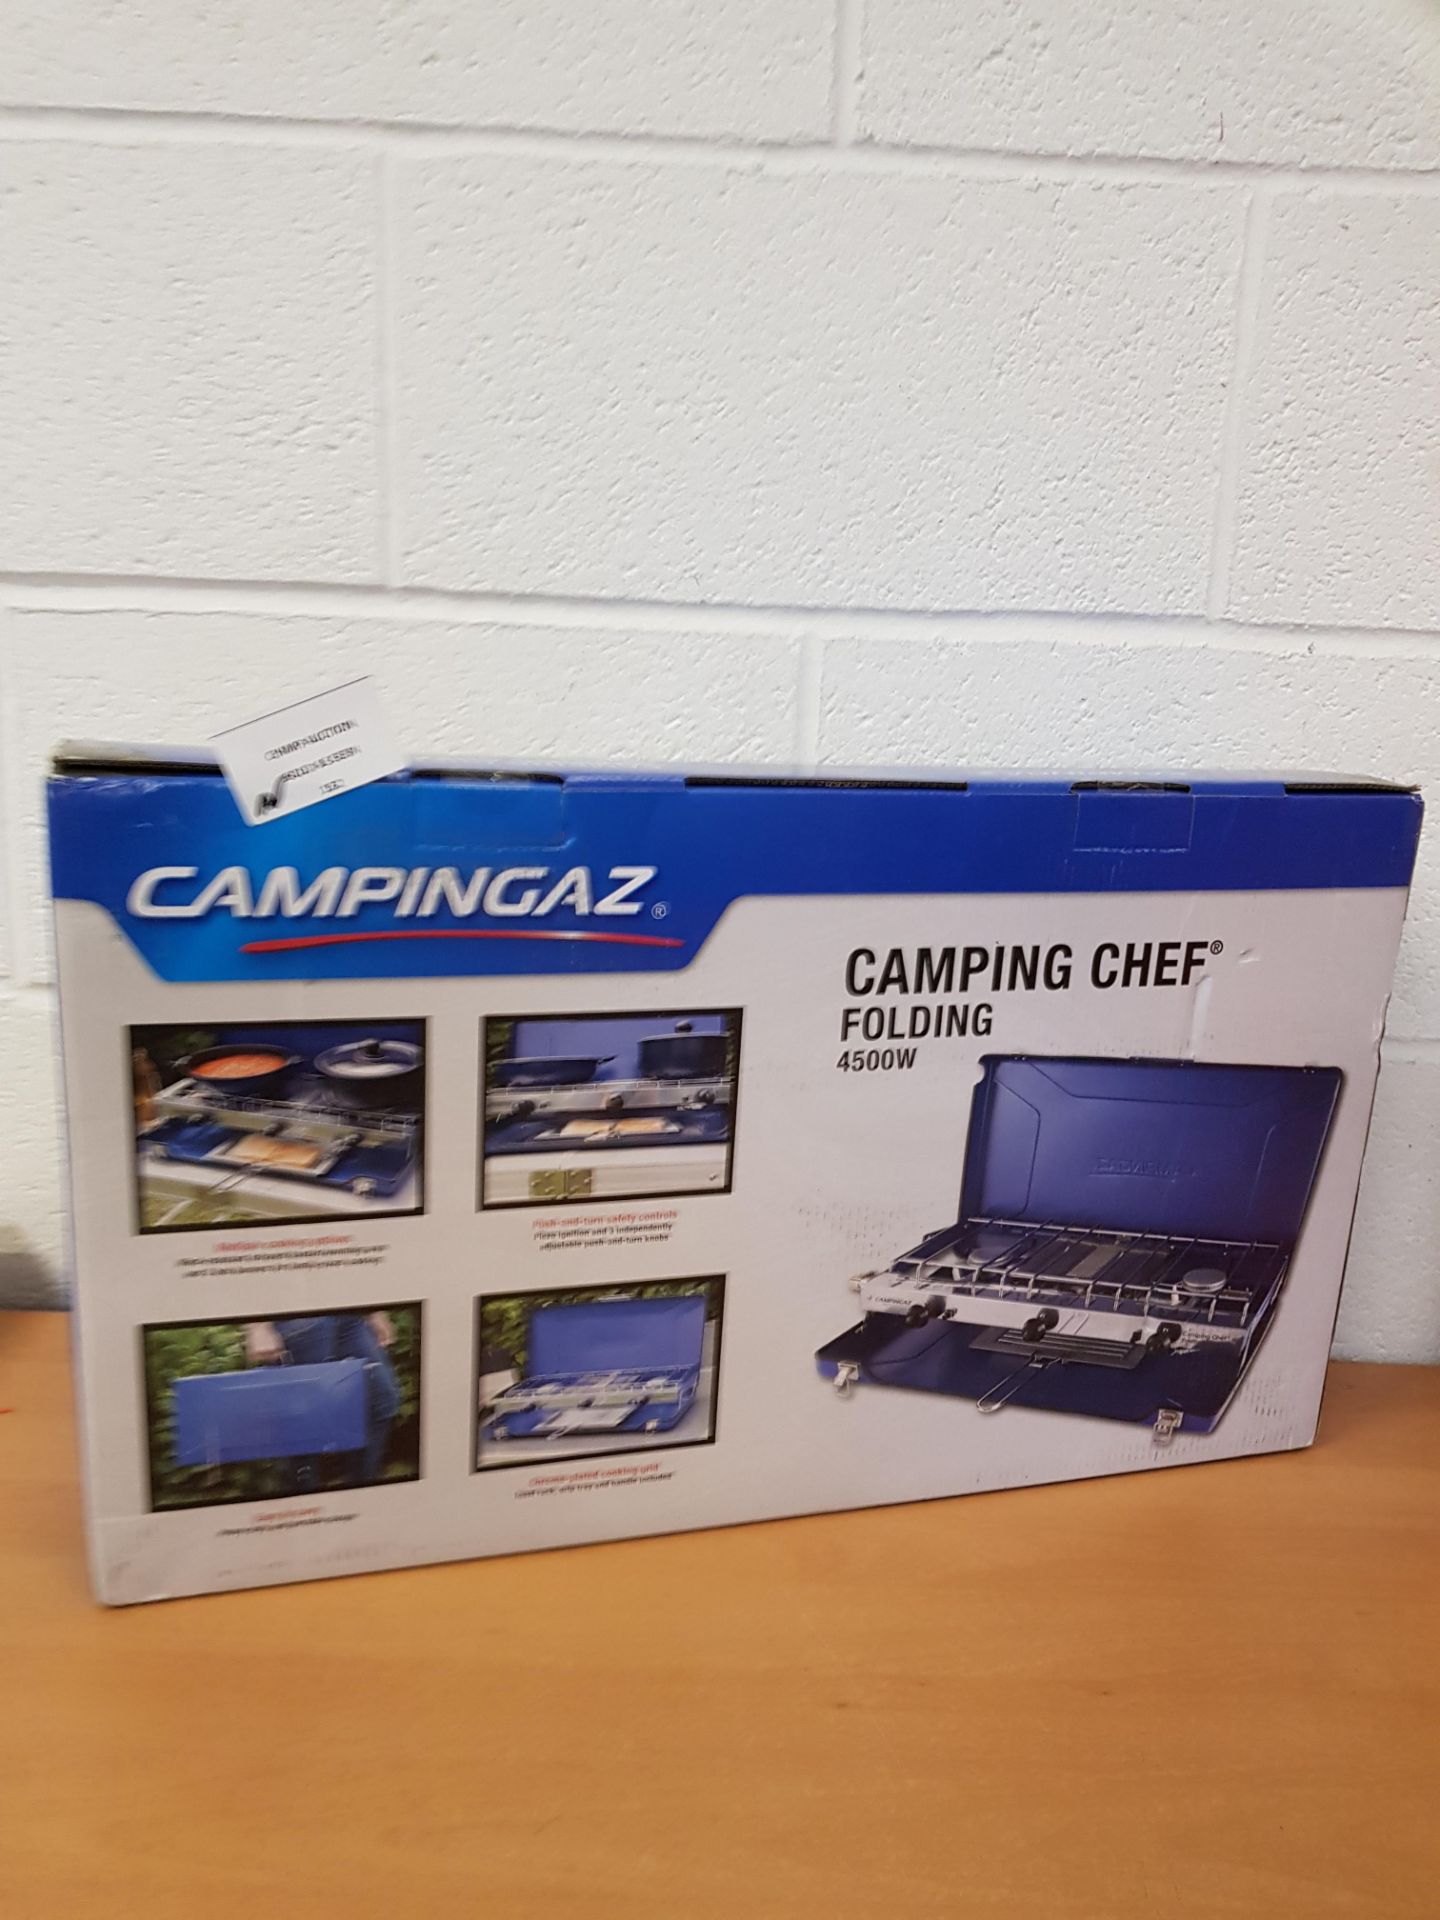 Brand new Campingaz Camping Chef Folding